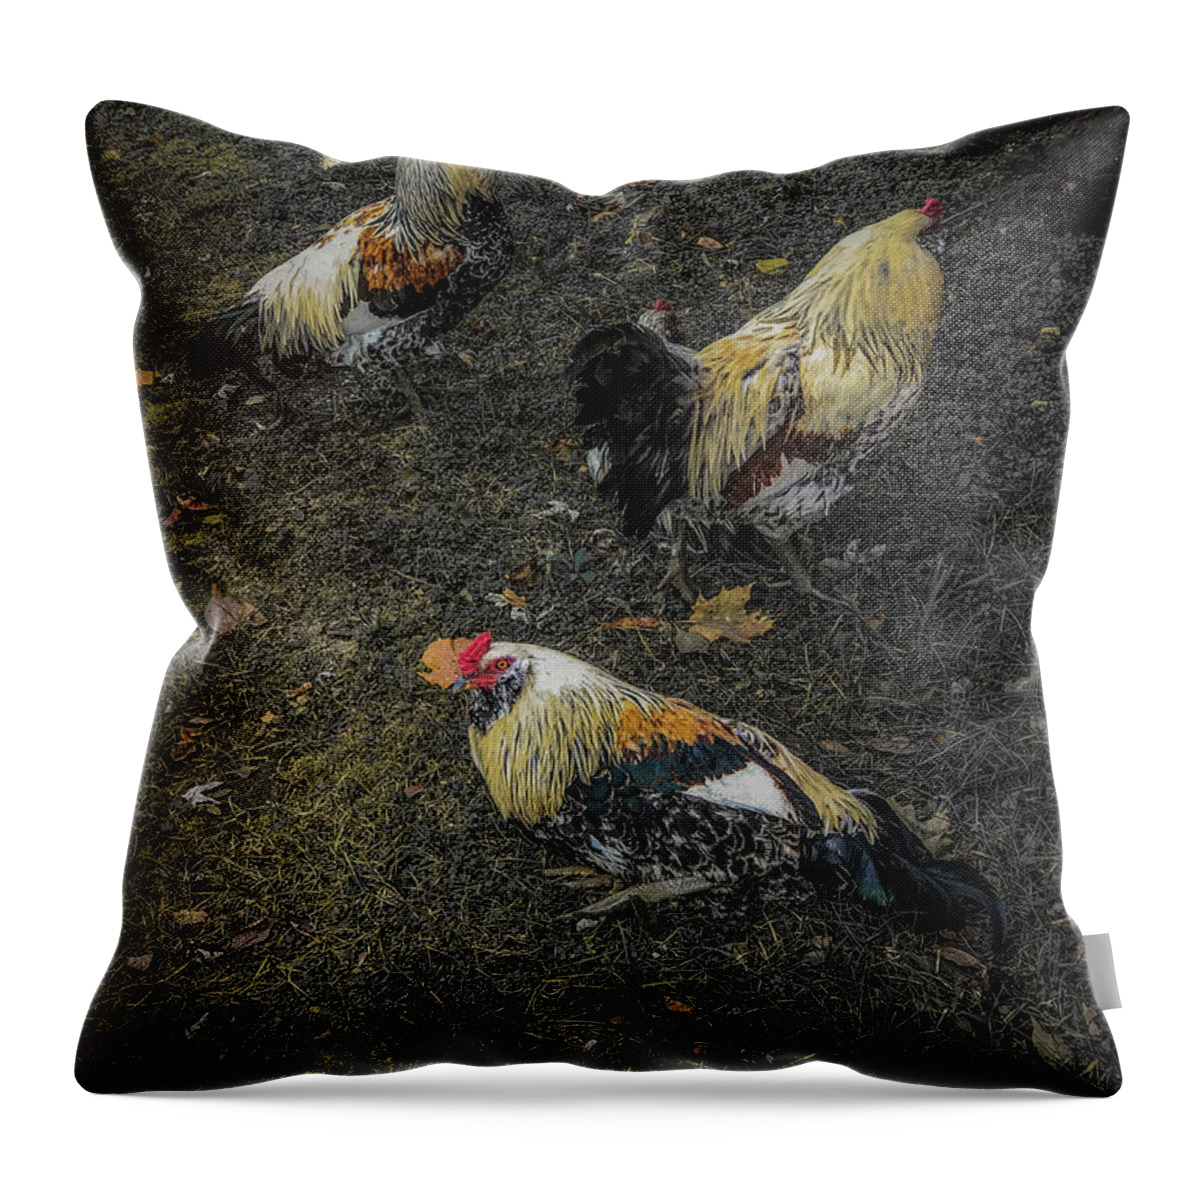 Birds Throw Pillow featuring the photograph Okemos Public Chicken by Joseph Yarbrough